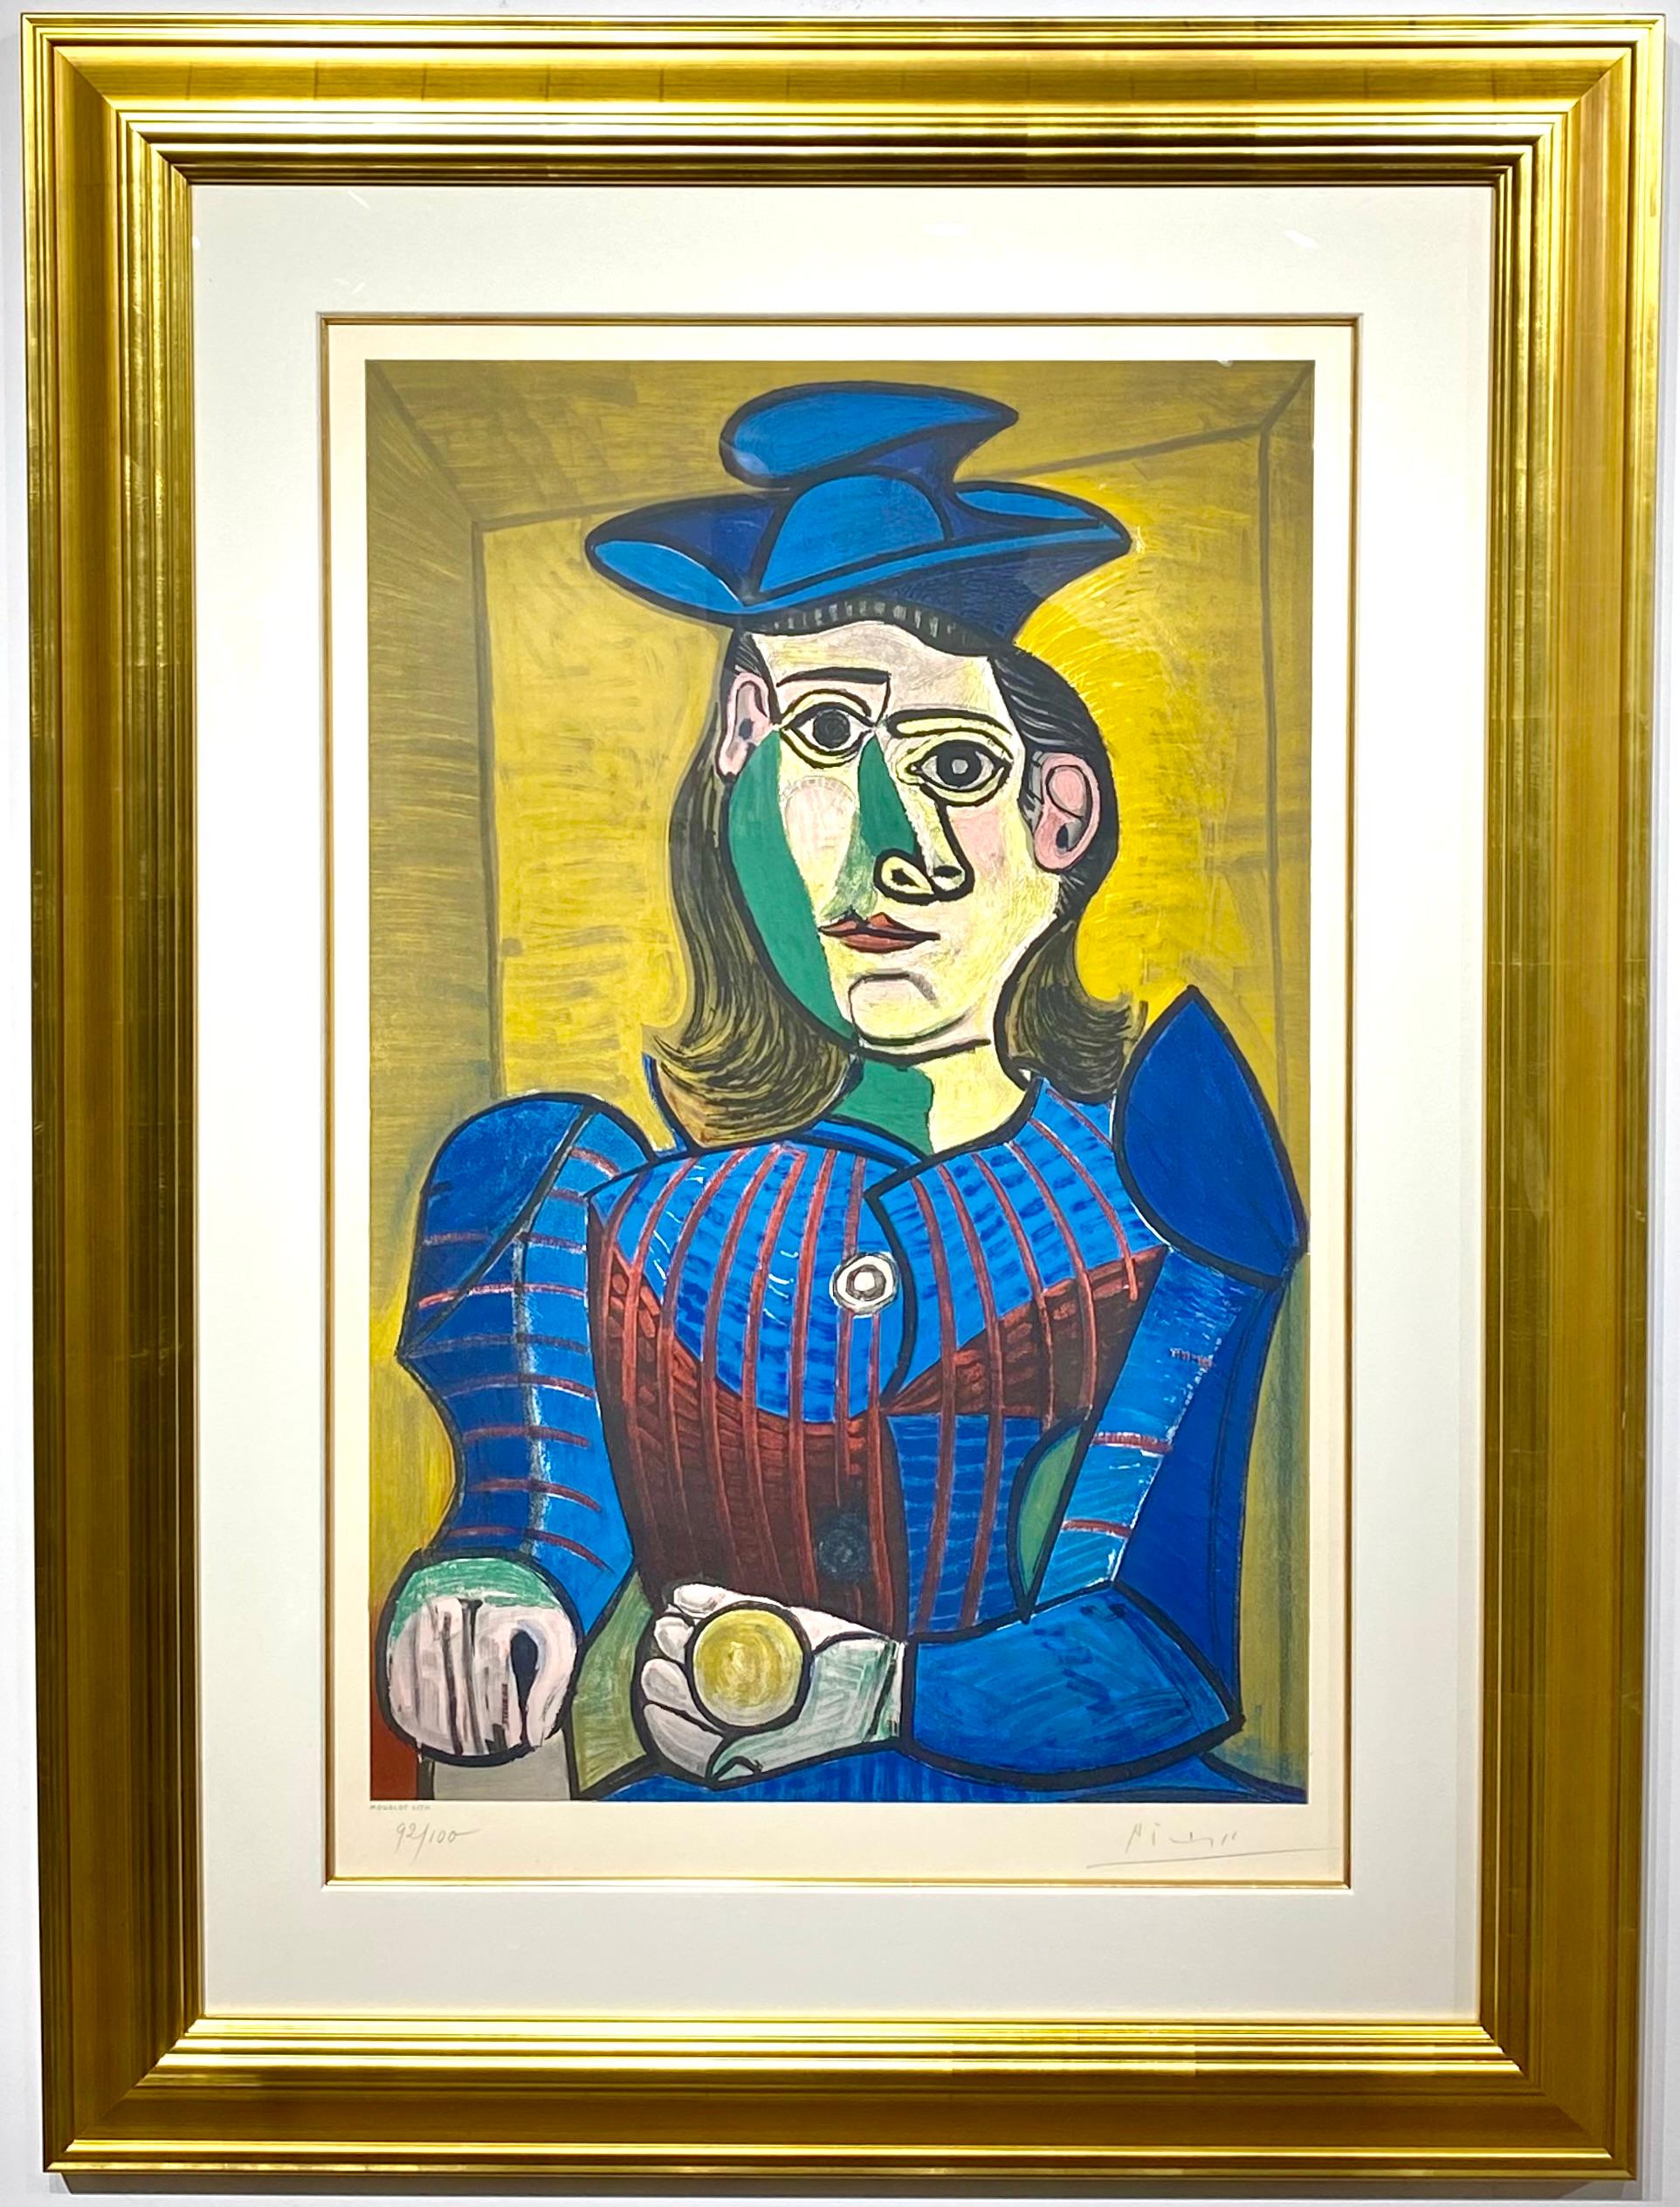 Pablo Picasso  "Femme assise" (Dora Maar)